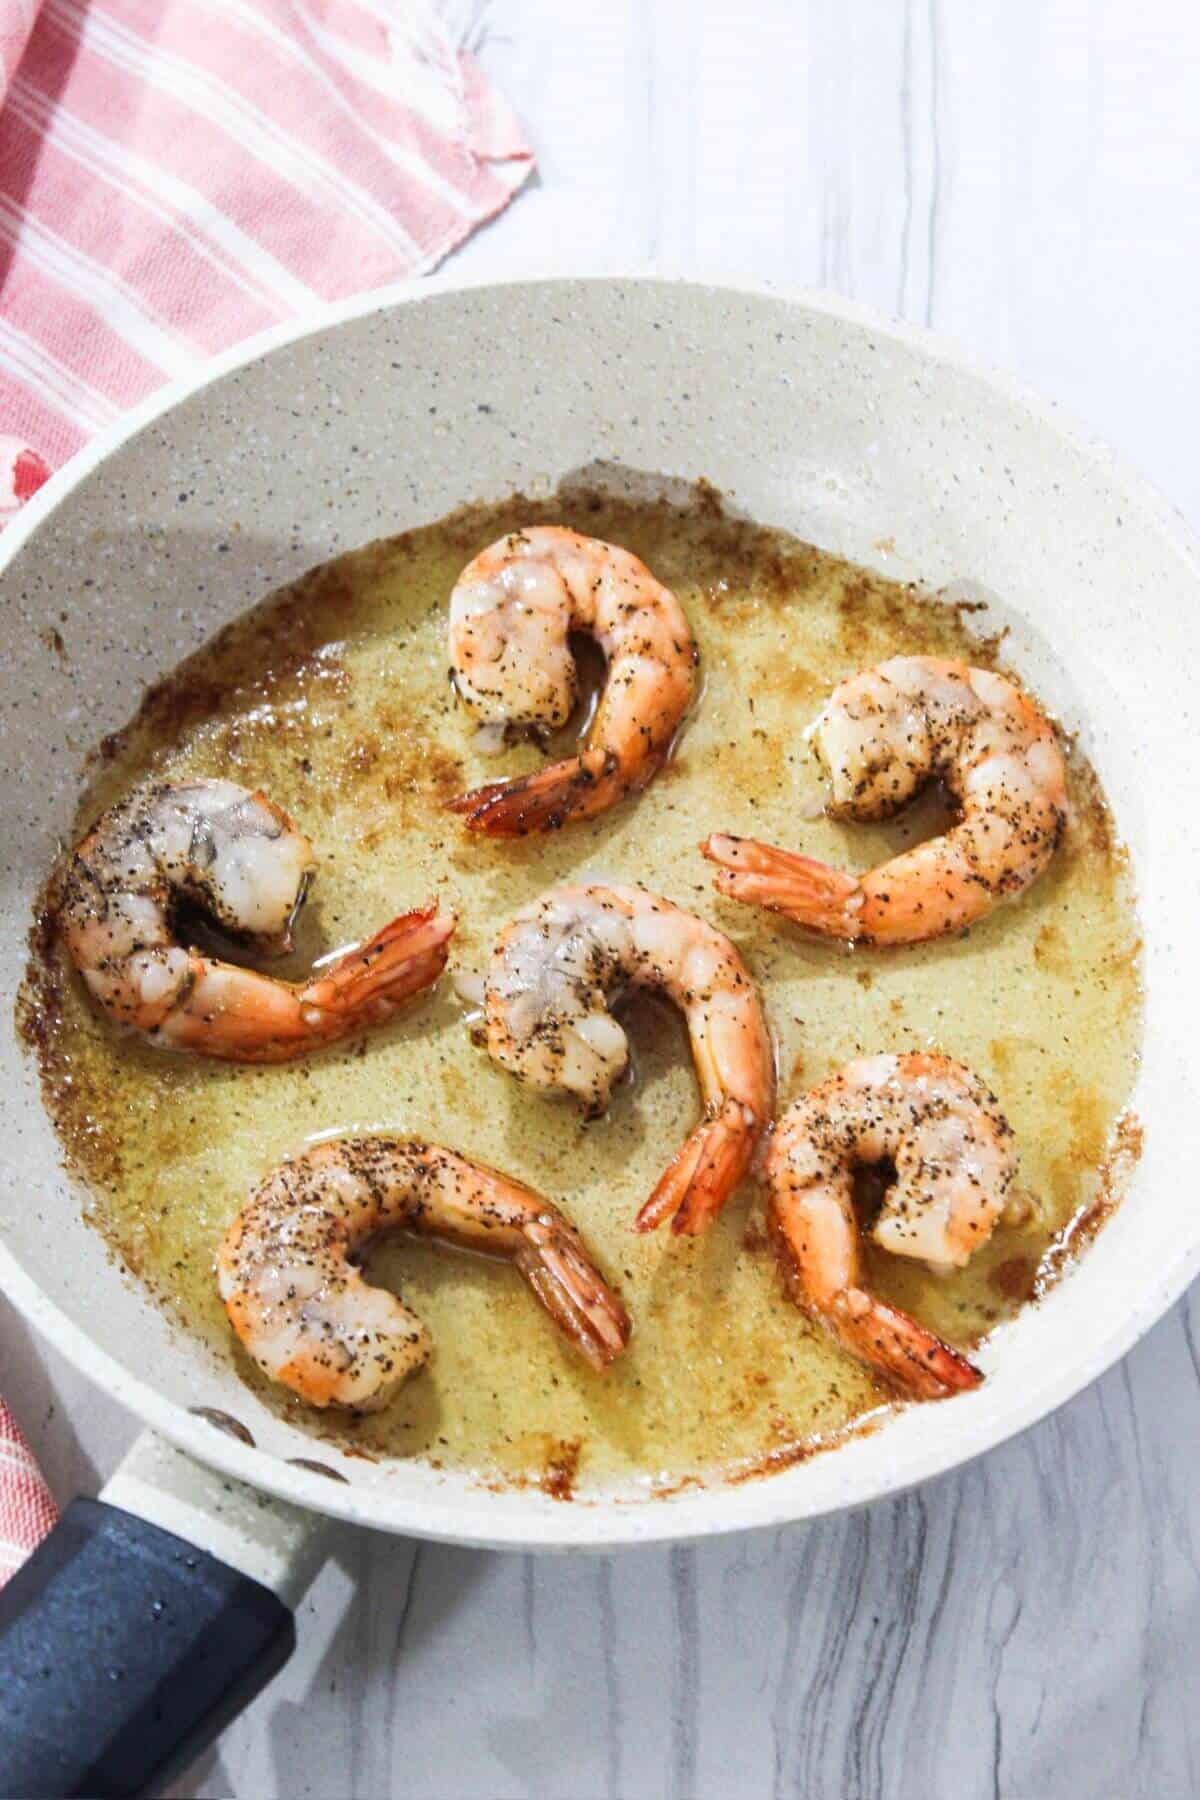 Fried shrimp in a frying pan.